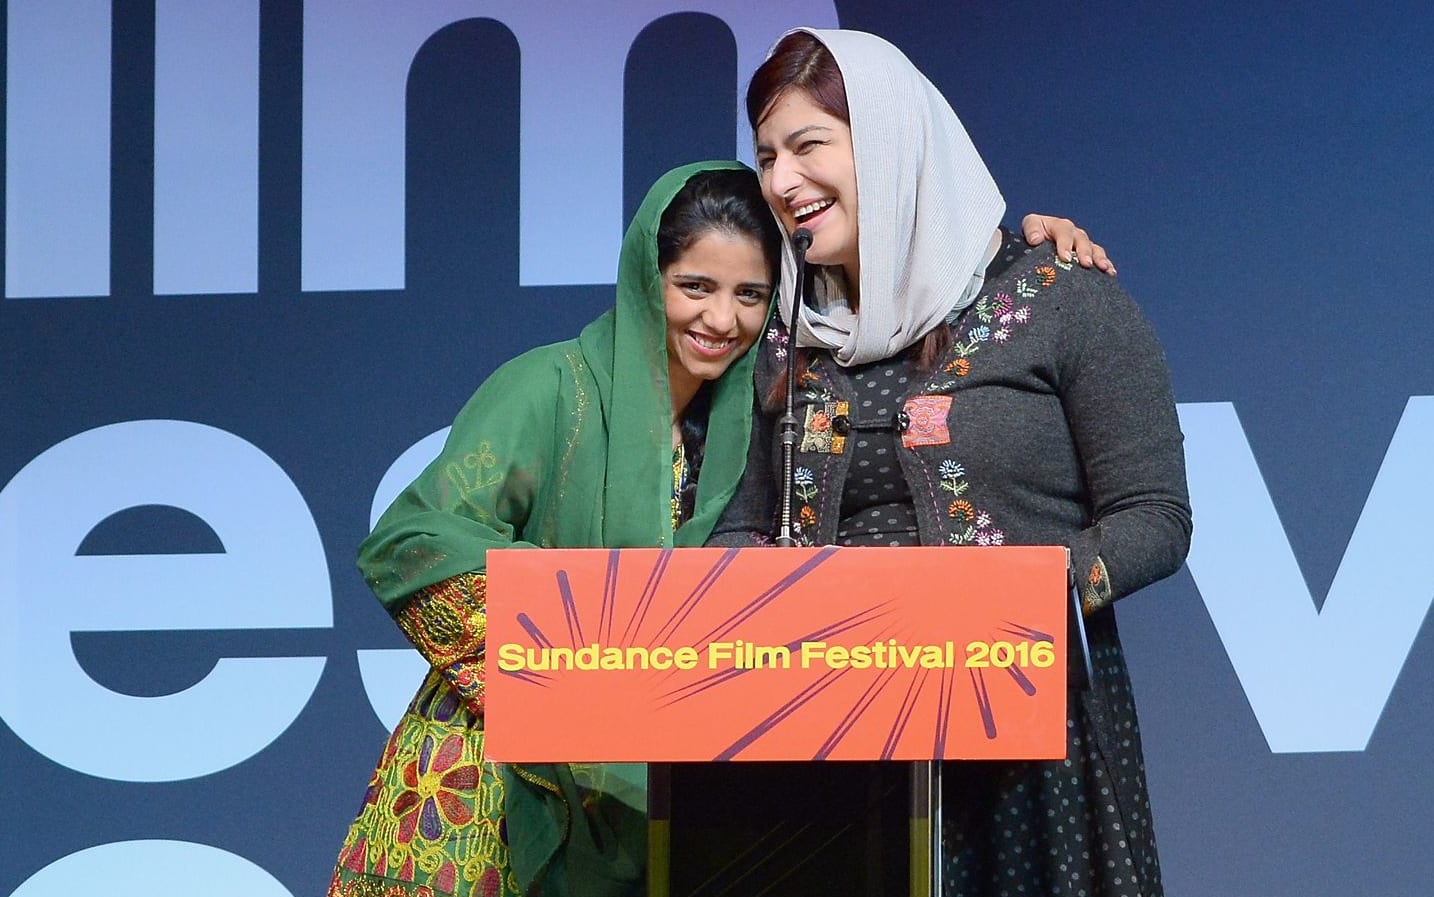 Sonita Alizadeh and Rokhsareh Ghaemmaghami accept the Audience Award for a world cinema documentary at the Sundance Film Festival Awards.